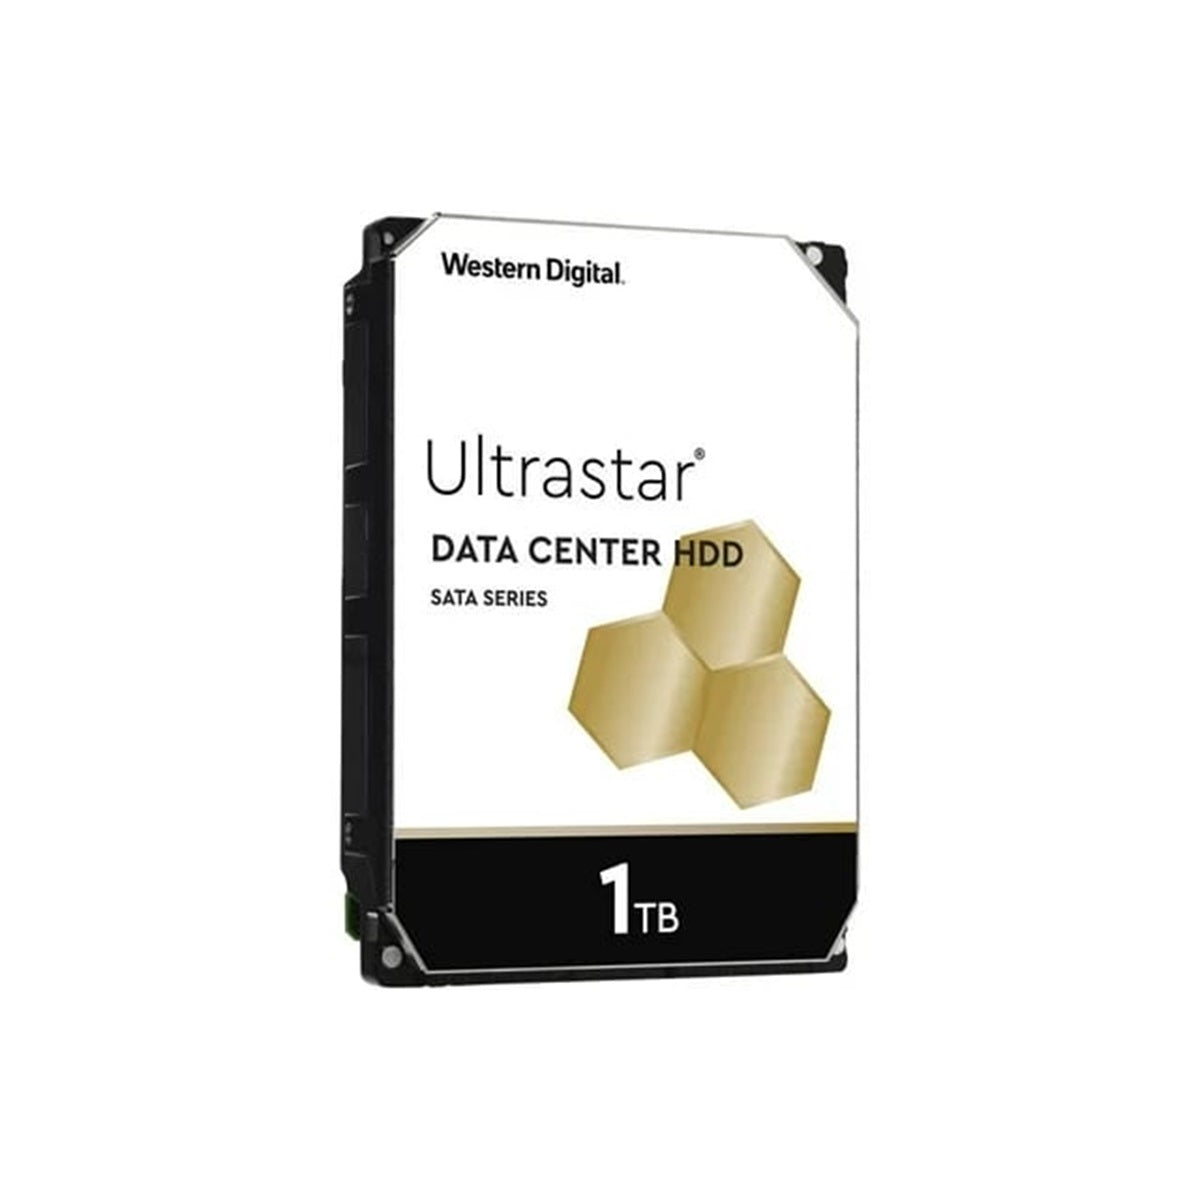 WD 1W10001 Ultrastar 1TB 3.5 Inch SATA Hard Drive